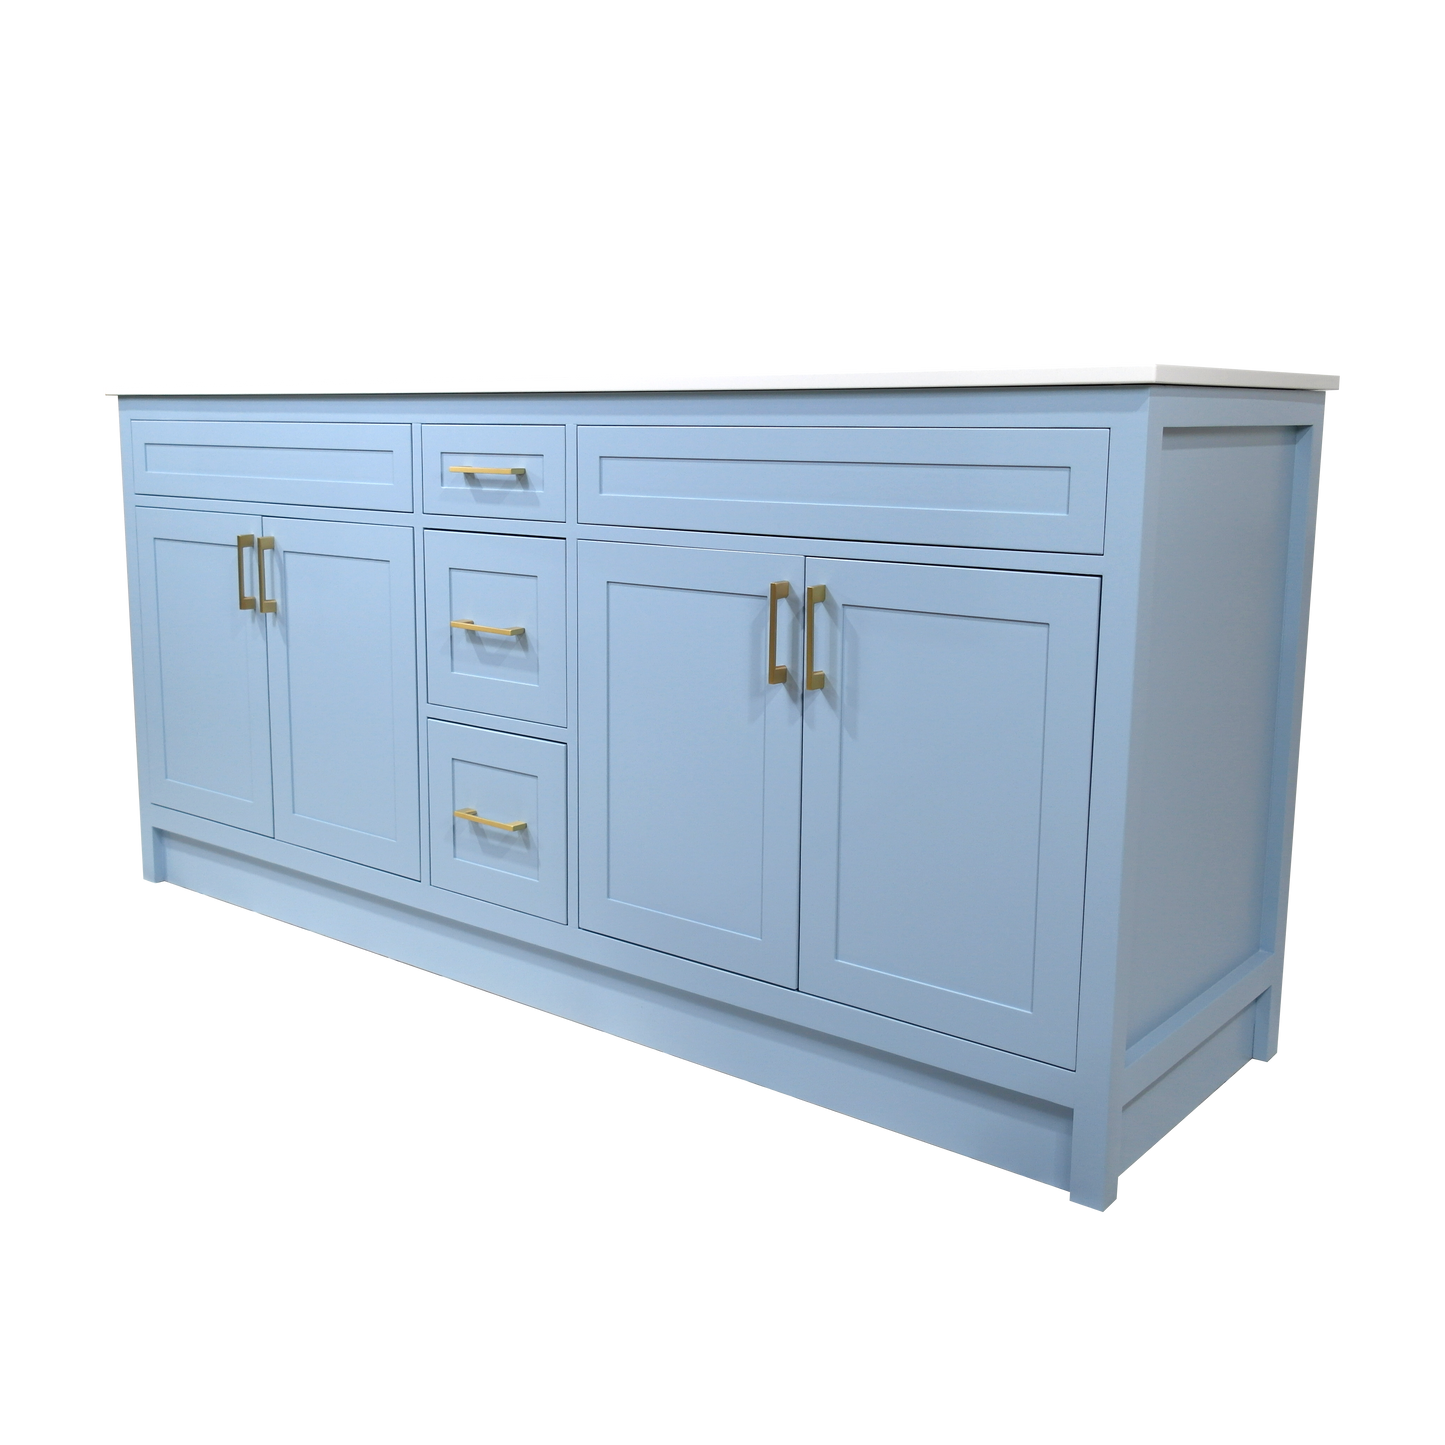 72" wood sky blue vanity for bathroom cabinet with Quartz top